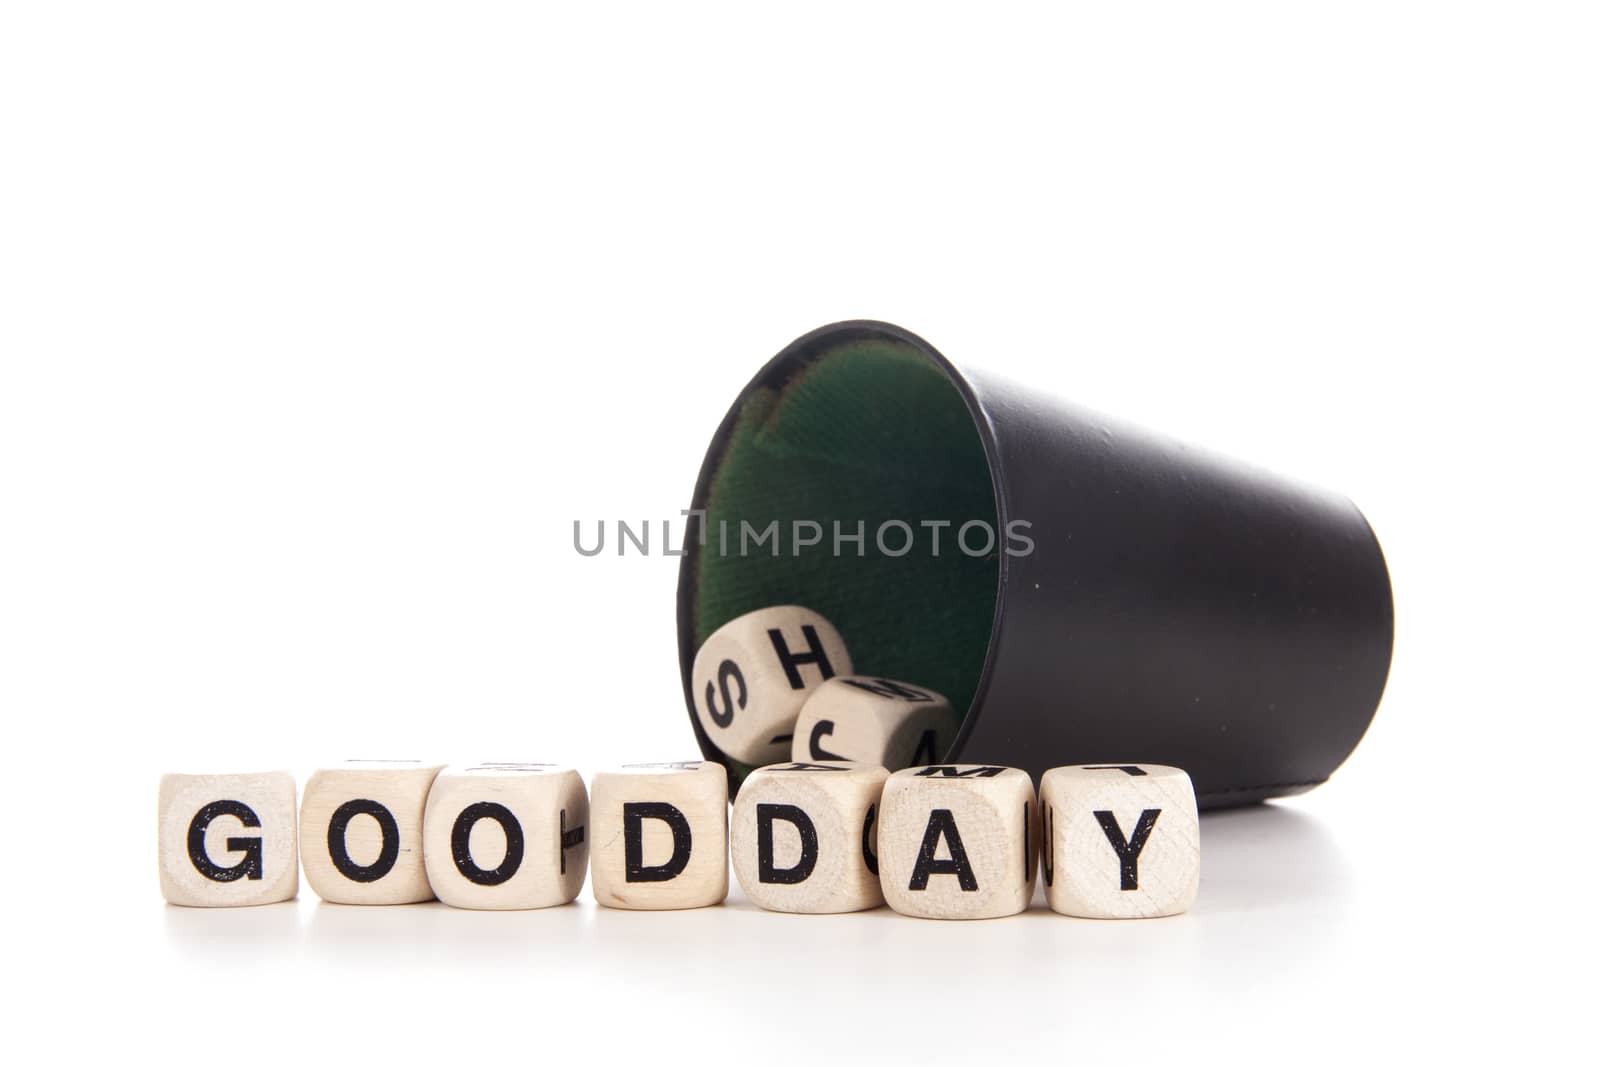 goodday in dices by joophoek